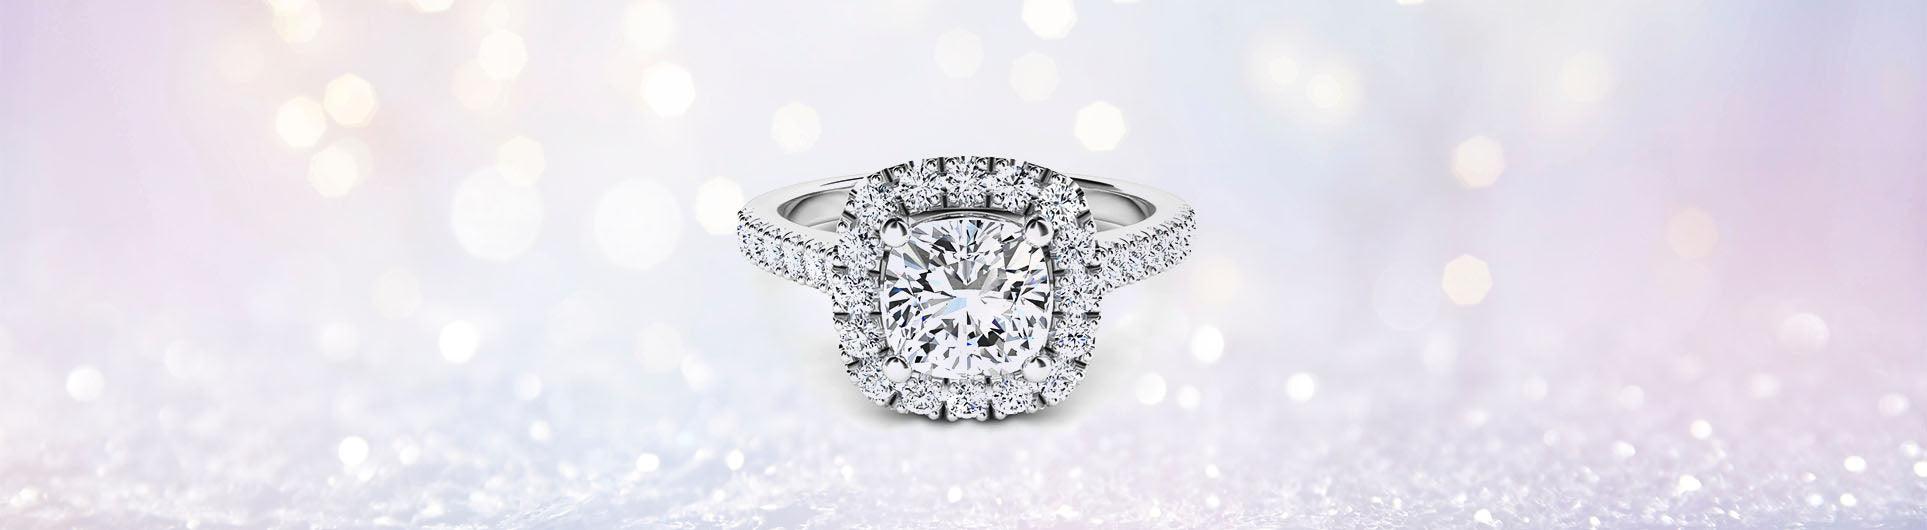 Halo Diamond Engagement Rings - Monroe Yorke Diamonds